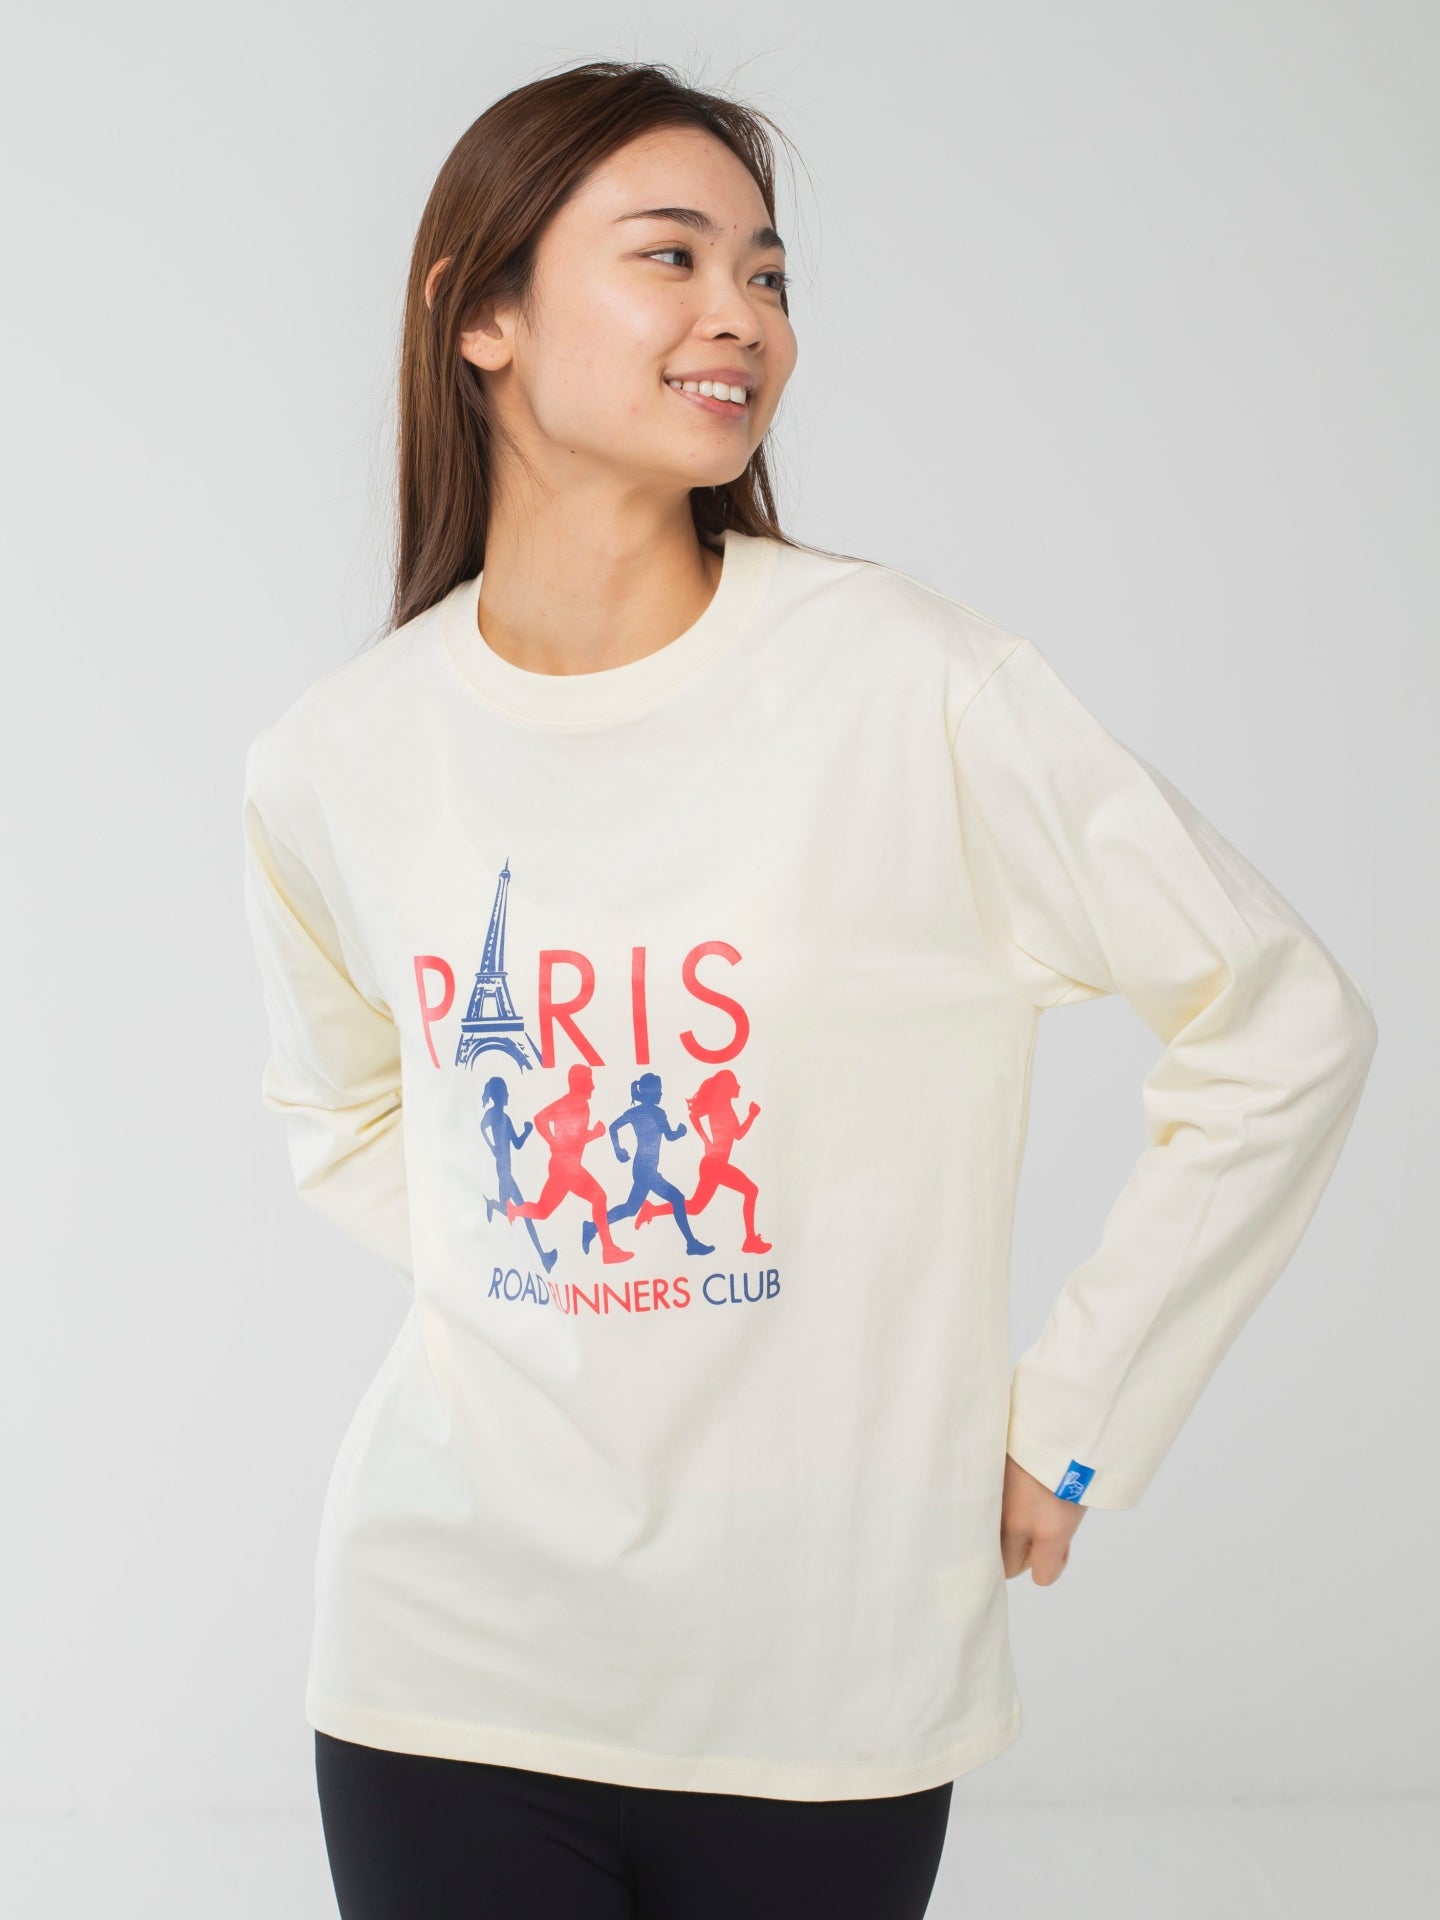 Paris Runners Club Long-Sleeve Tee Apricot